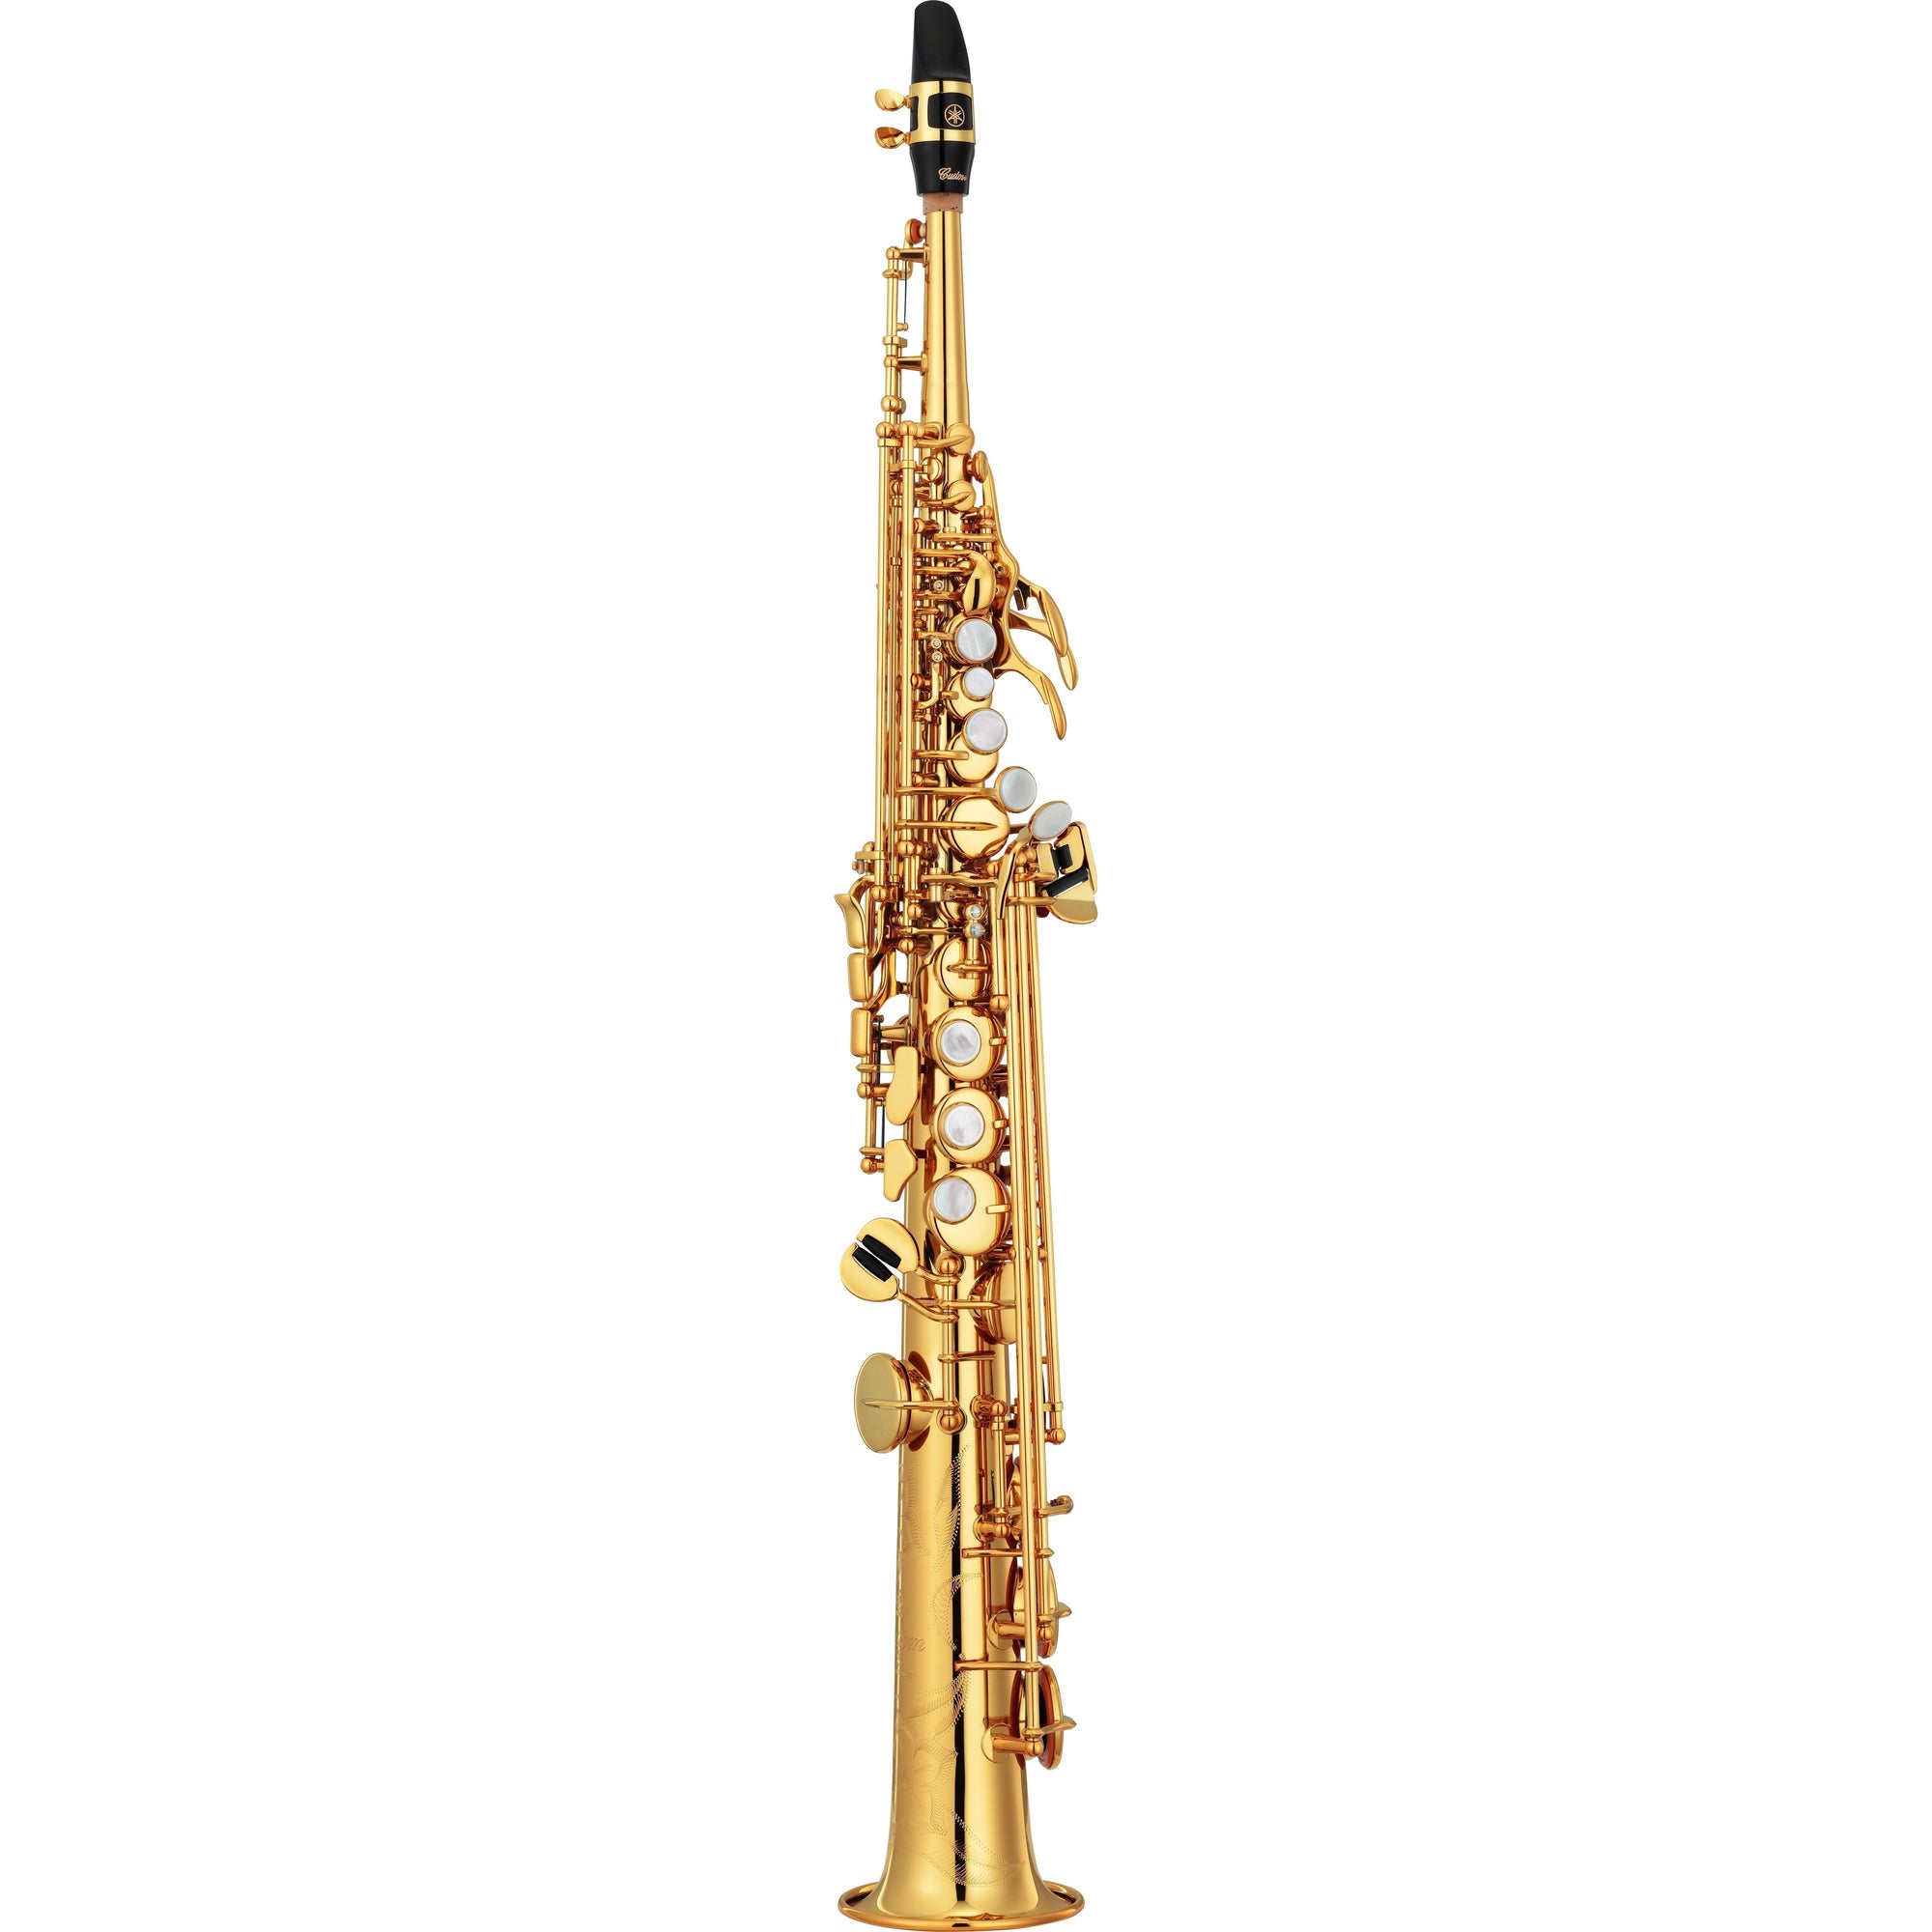 Yamaha - YSS-82Z - Custom Z Soprano Saxophone-Saxophone-Yamaha-Music Elements